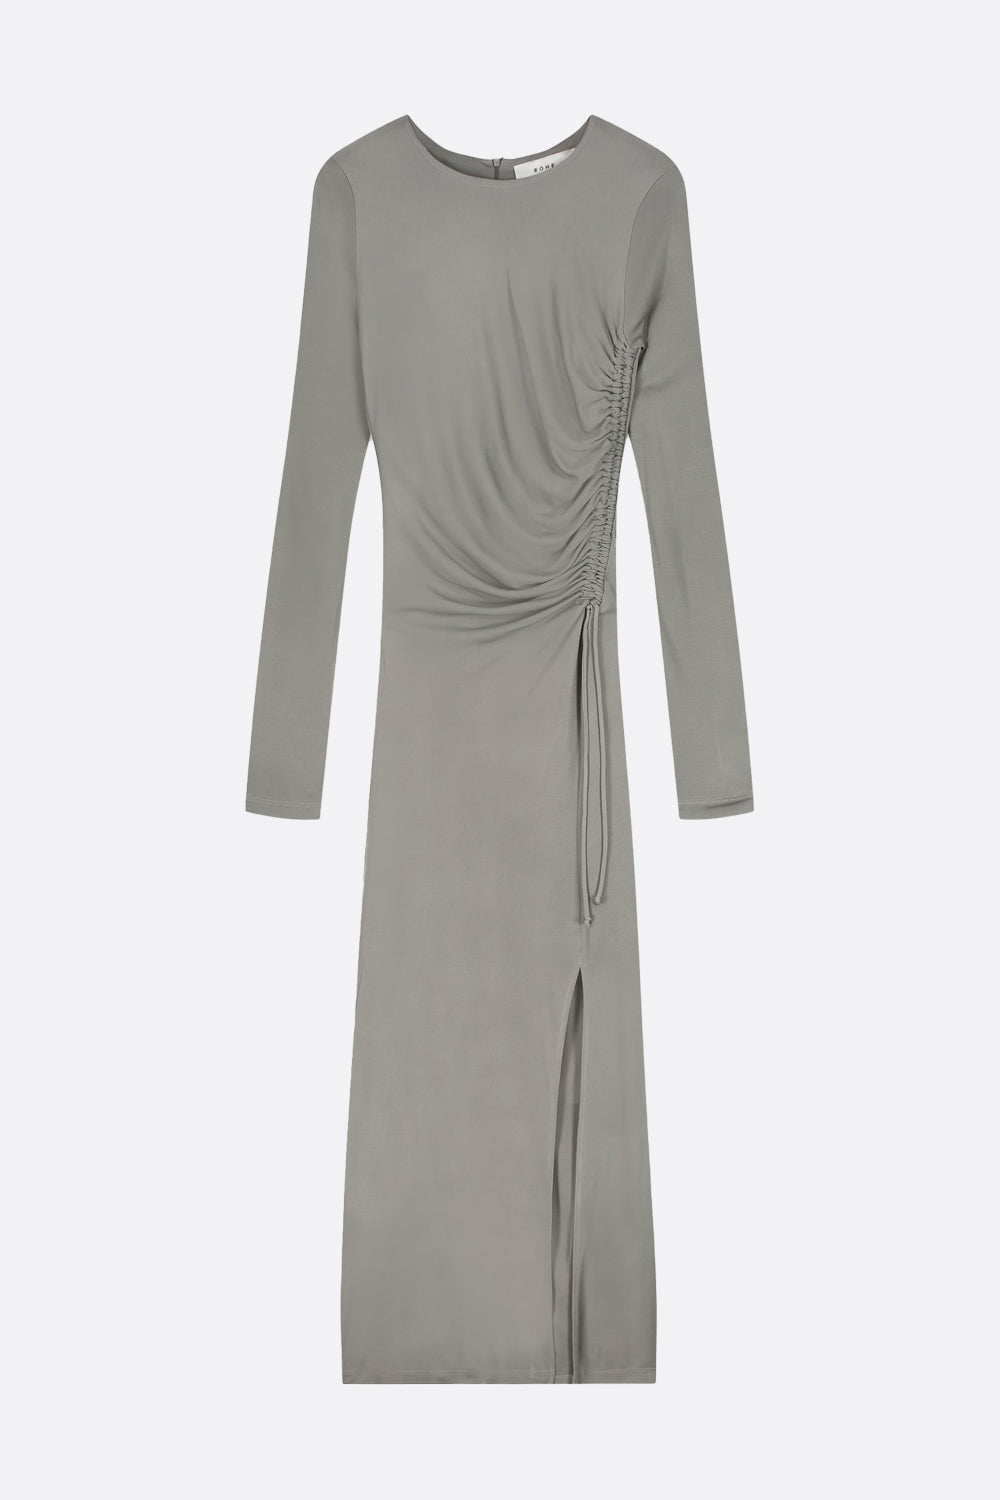 Panorama lag matchmaker Ròhe Drawstring Jersey Dress Grey - Surplustore